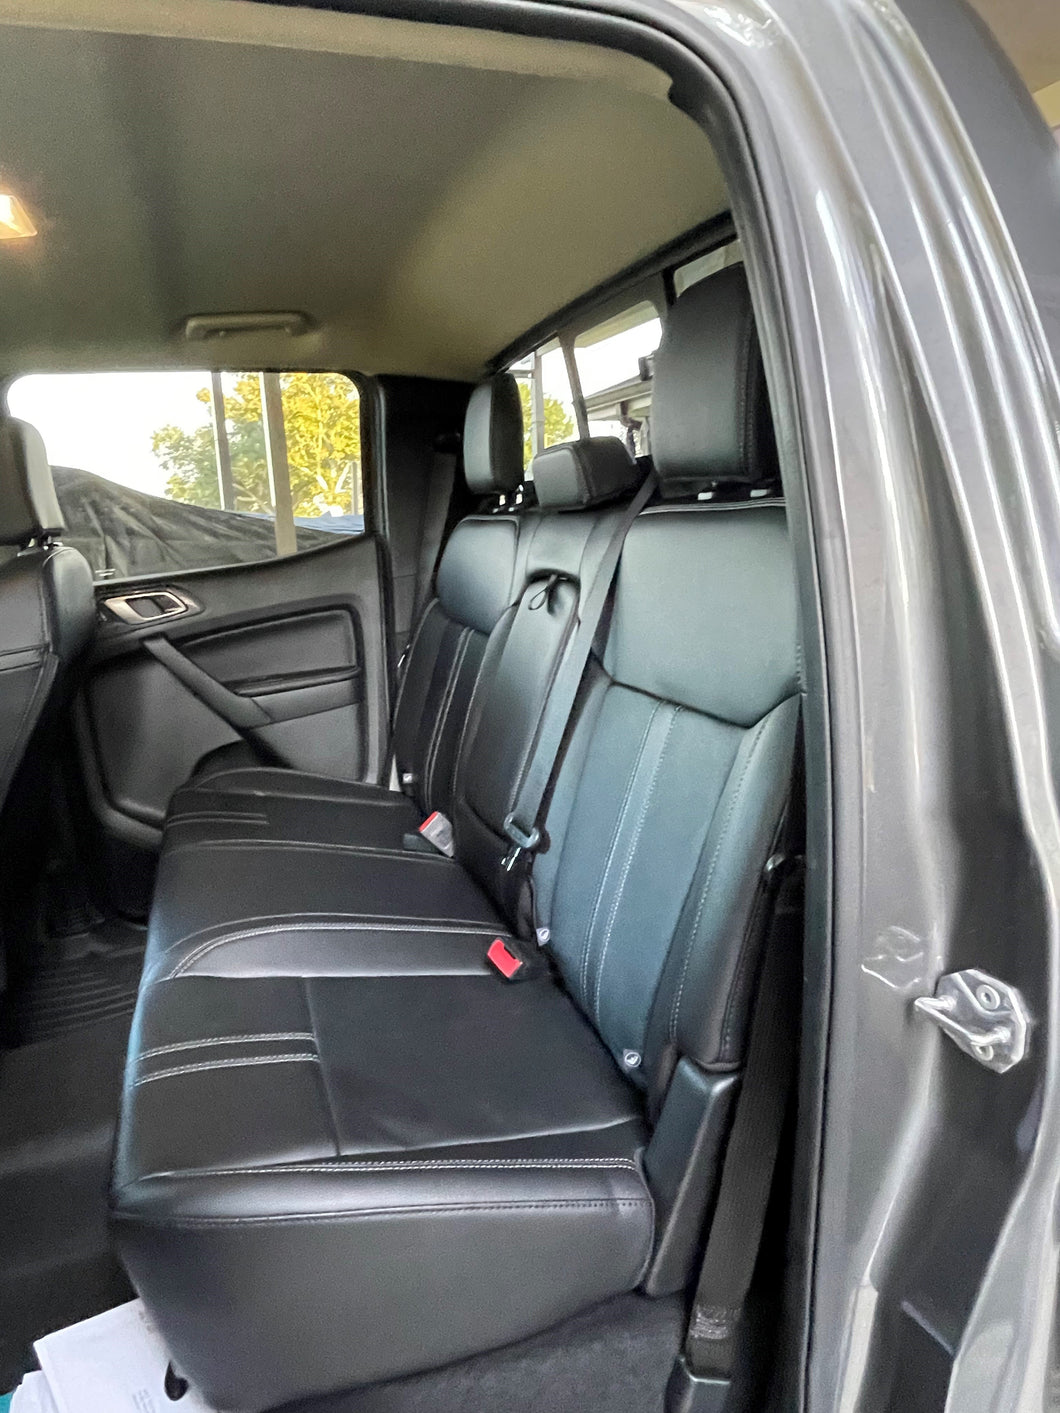 Ford Ranger Bench with armrest and adjustable headrest